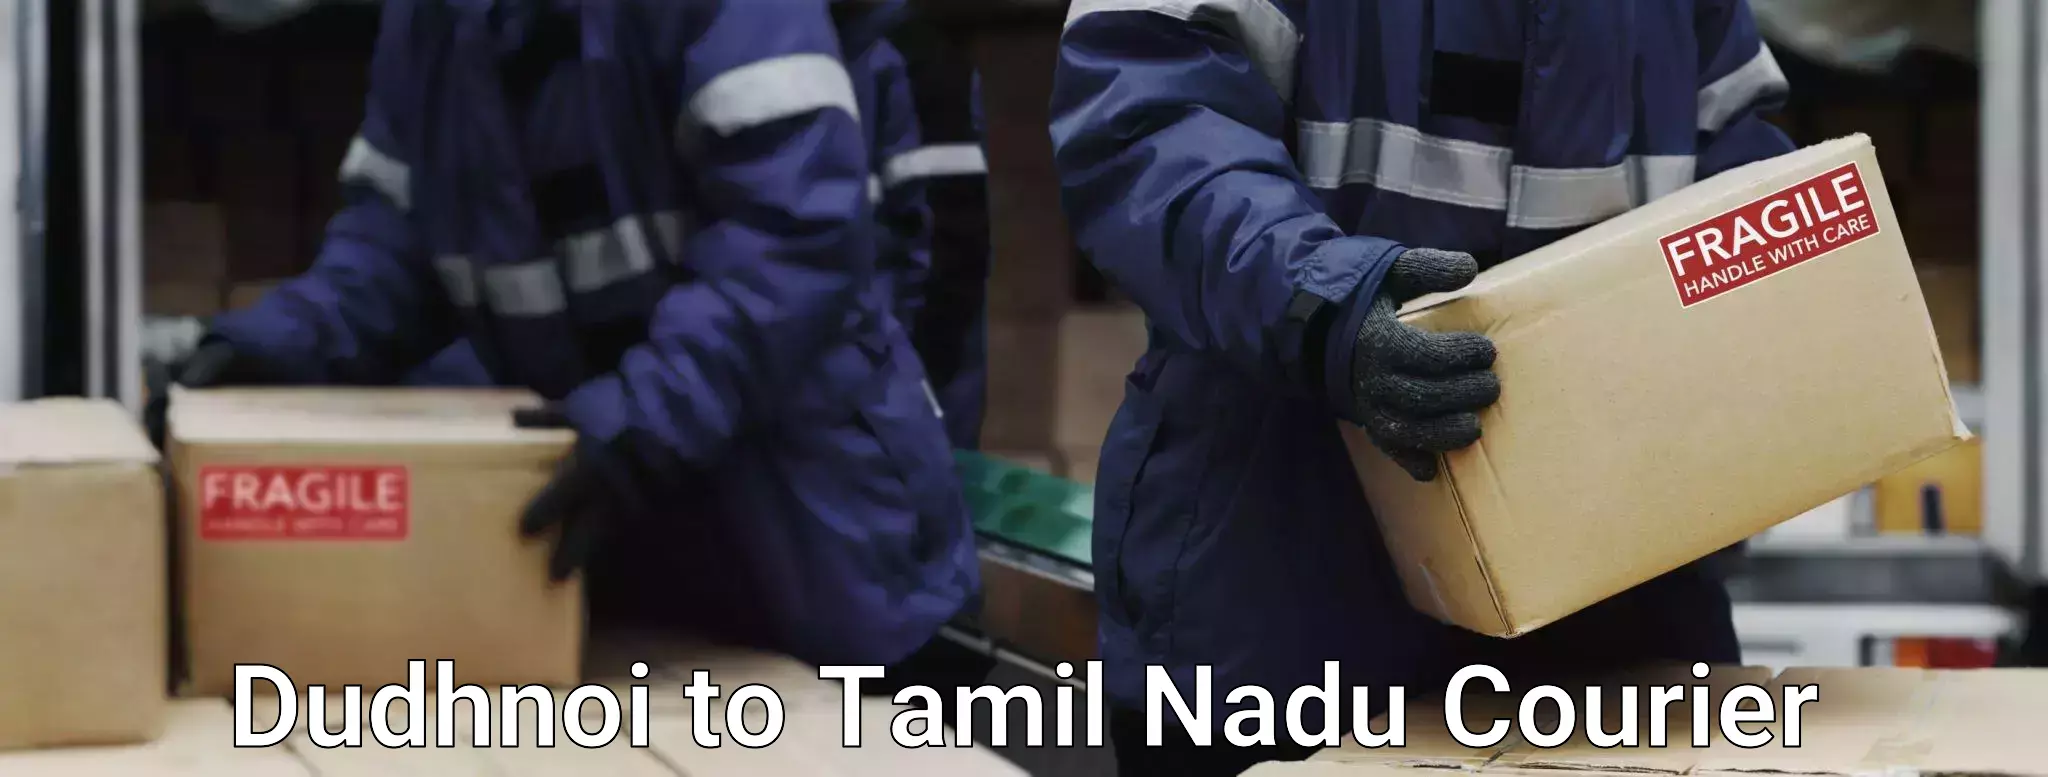 Luggage shipment specialists Dudhnoi to Tamil Nadu